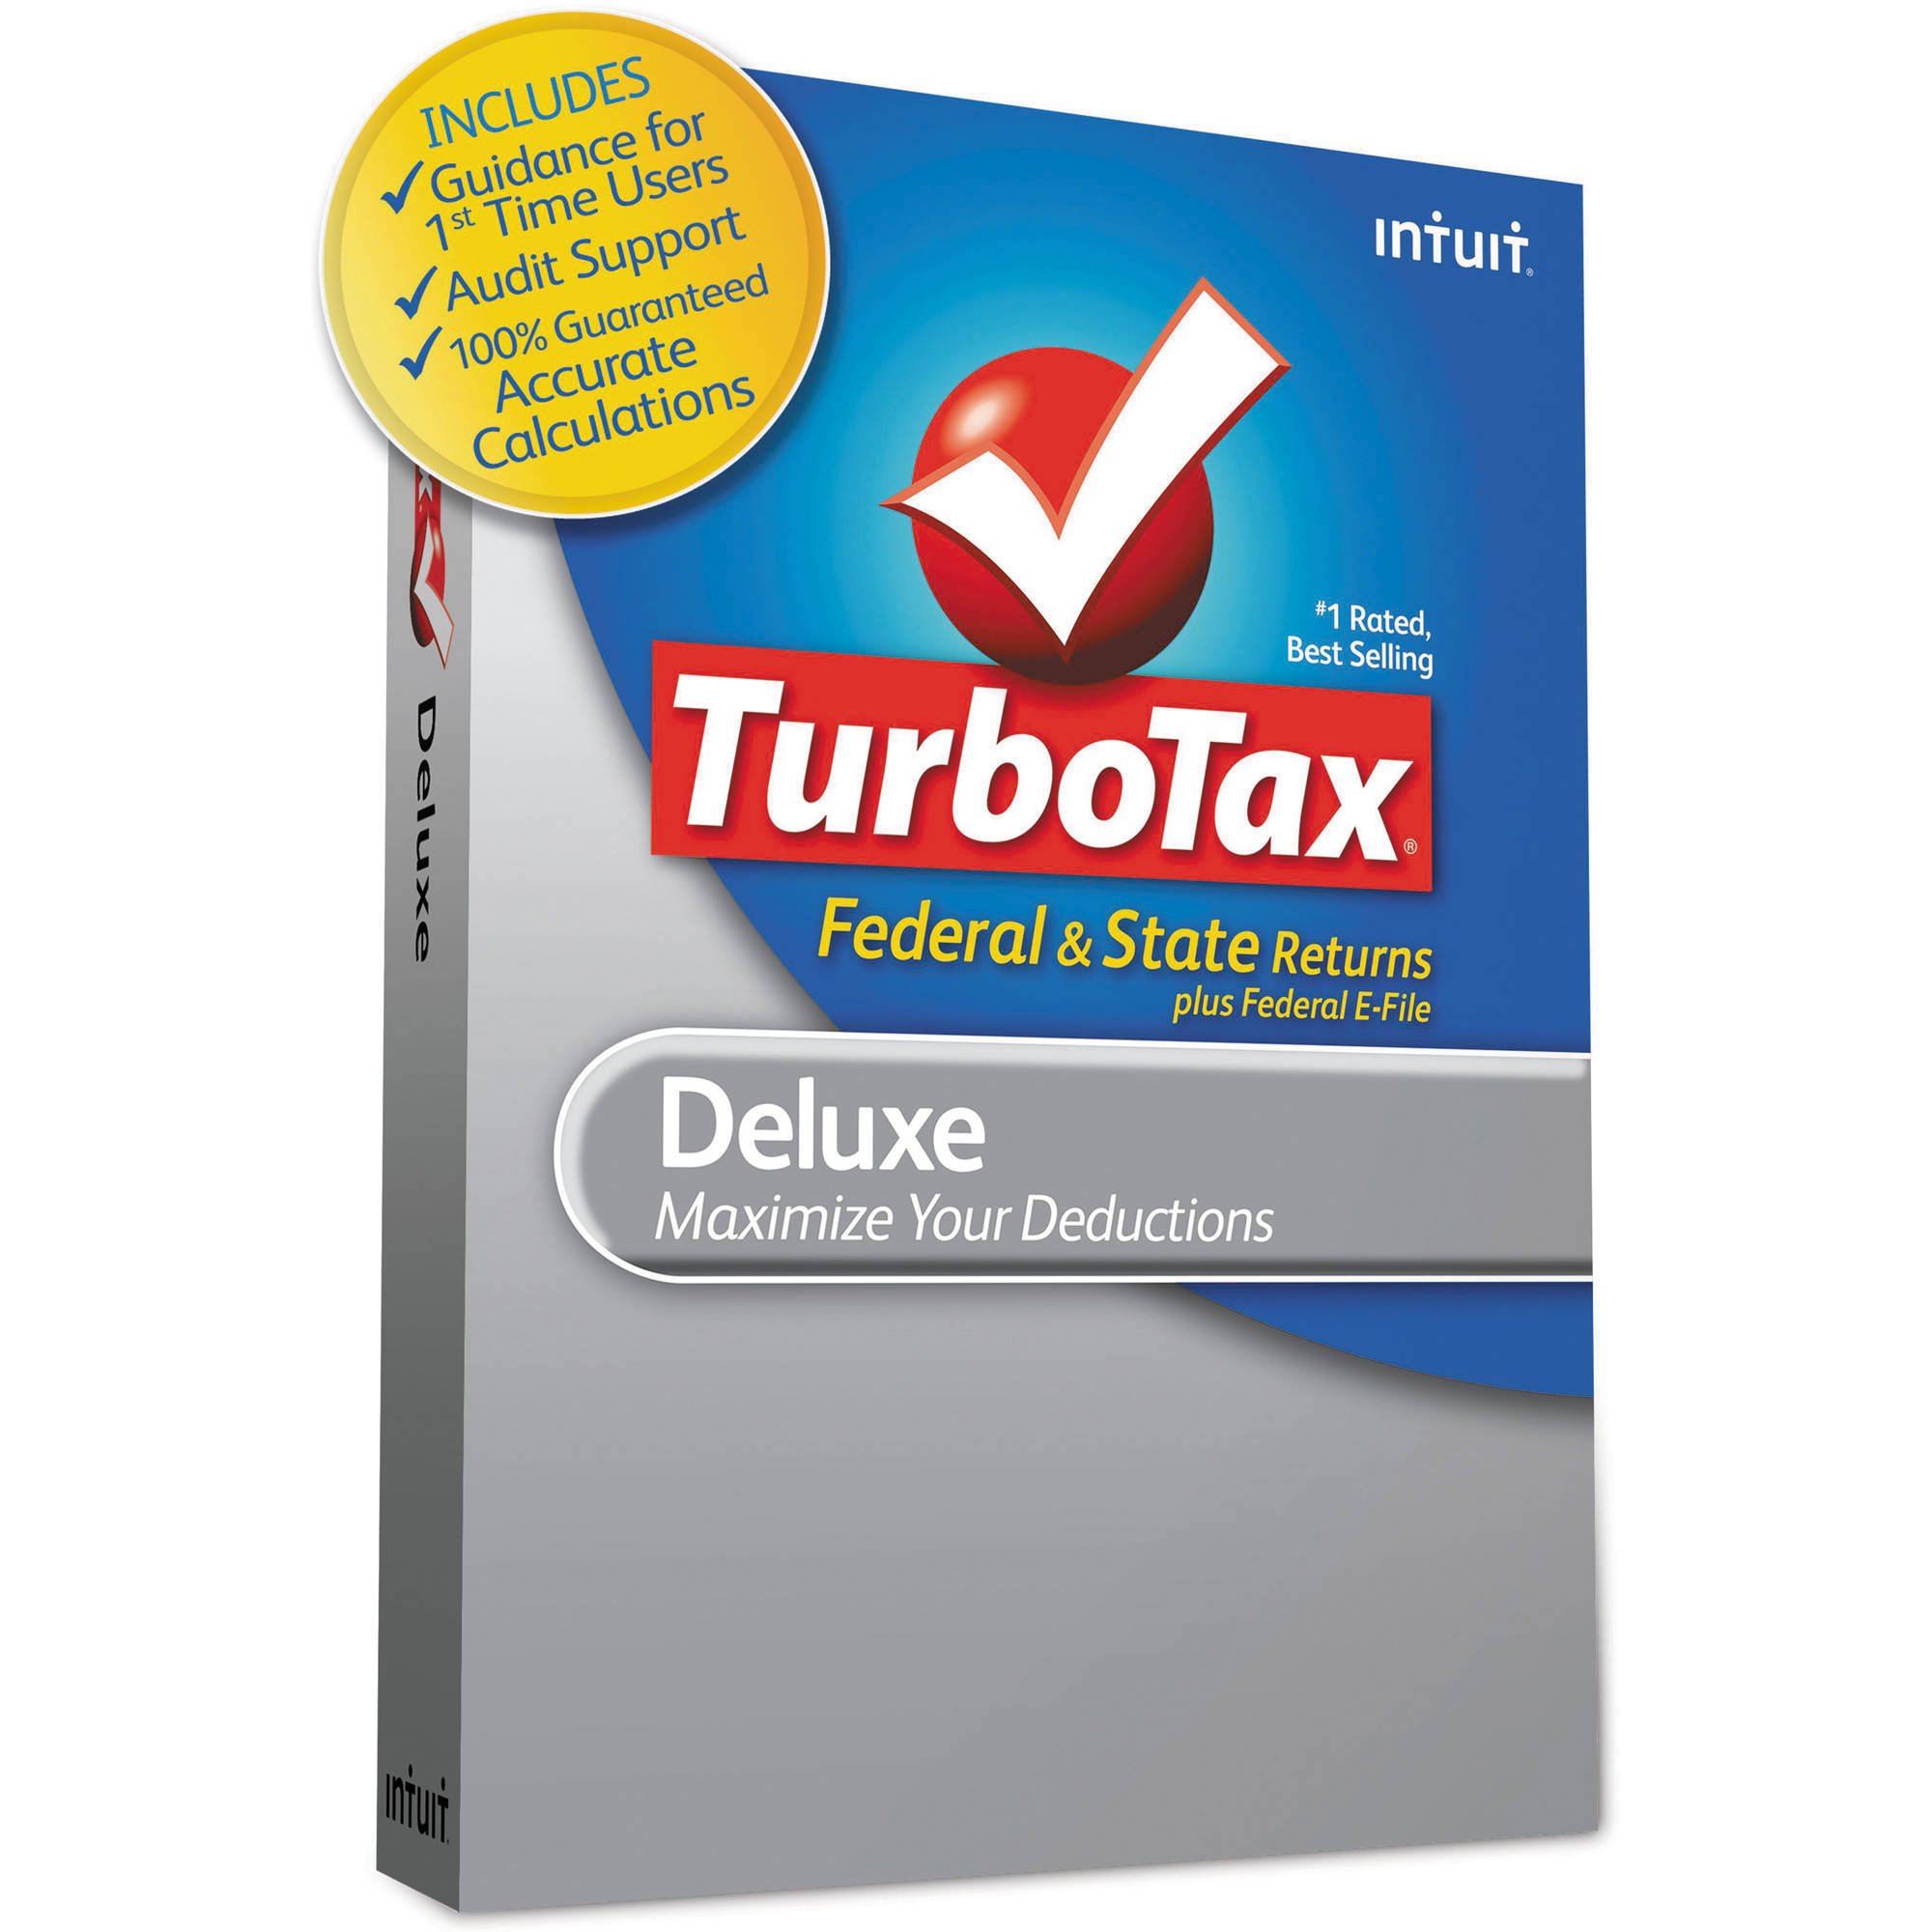 Turbotax File Download Location Mac